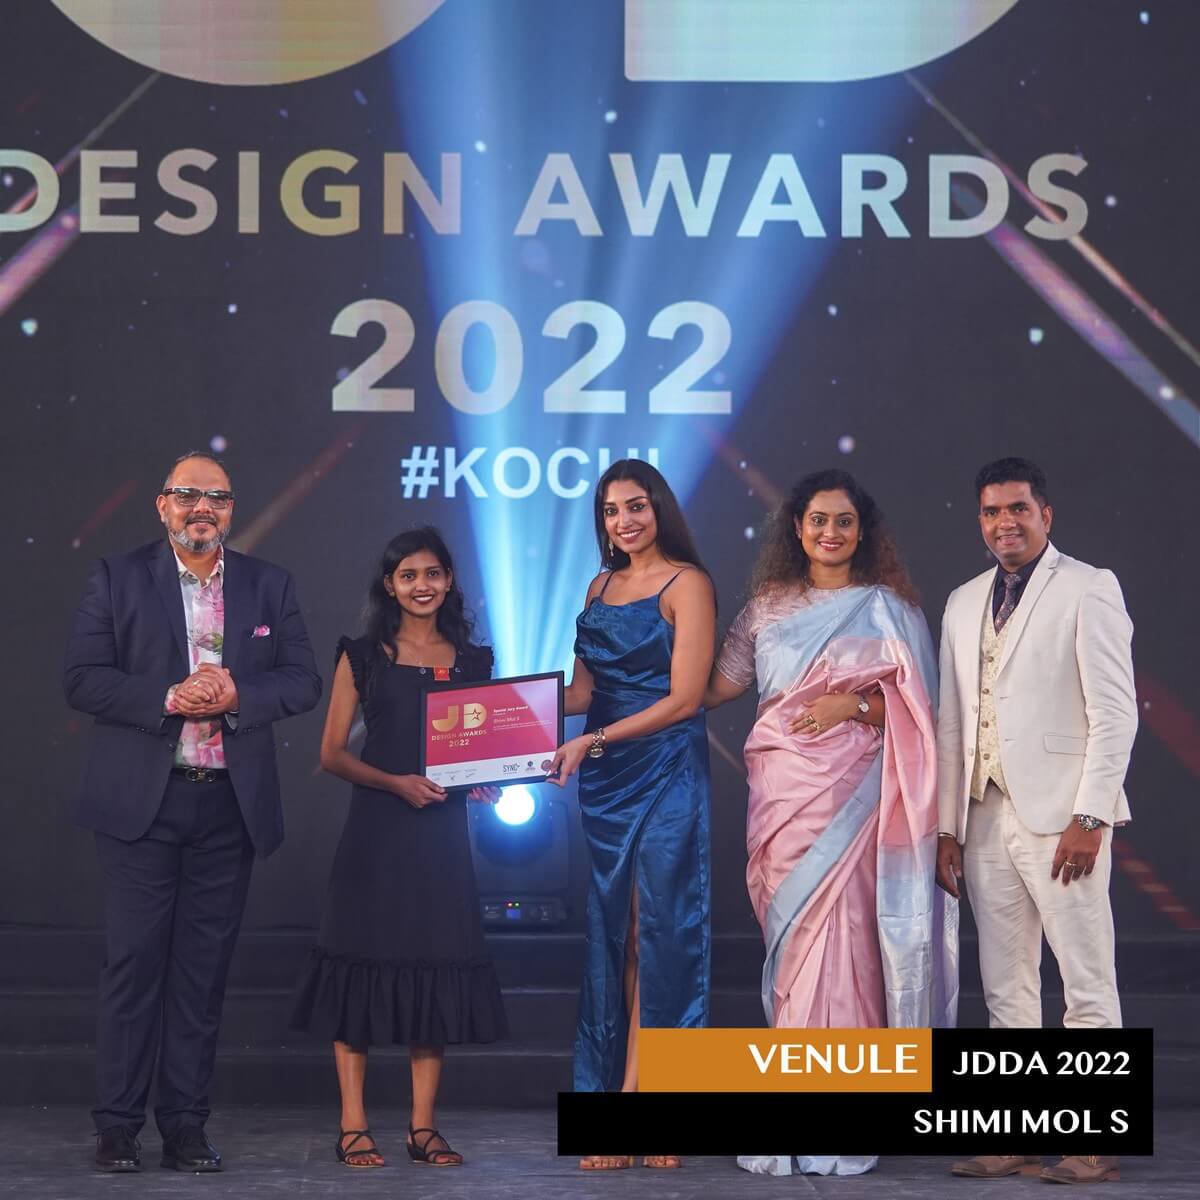 Venule – Sync JD Design Awards Academy of Design and Management